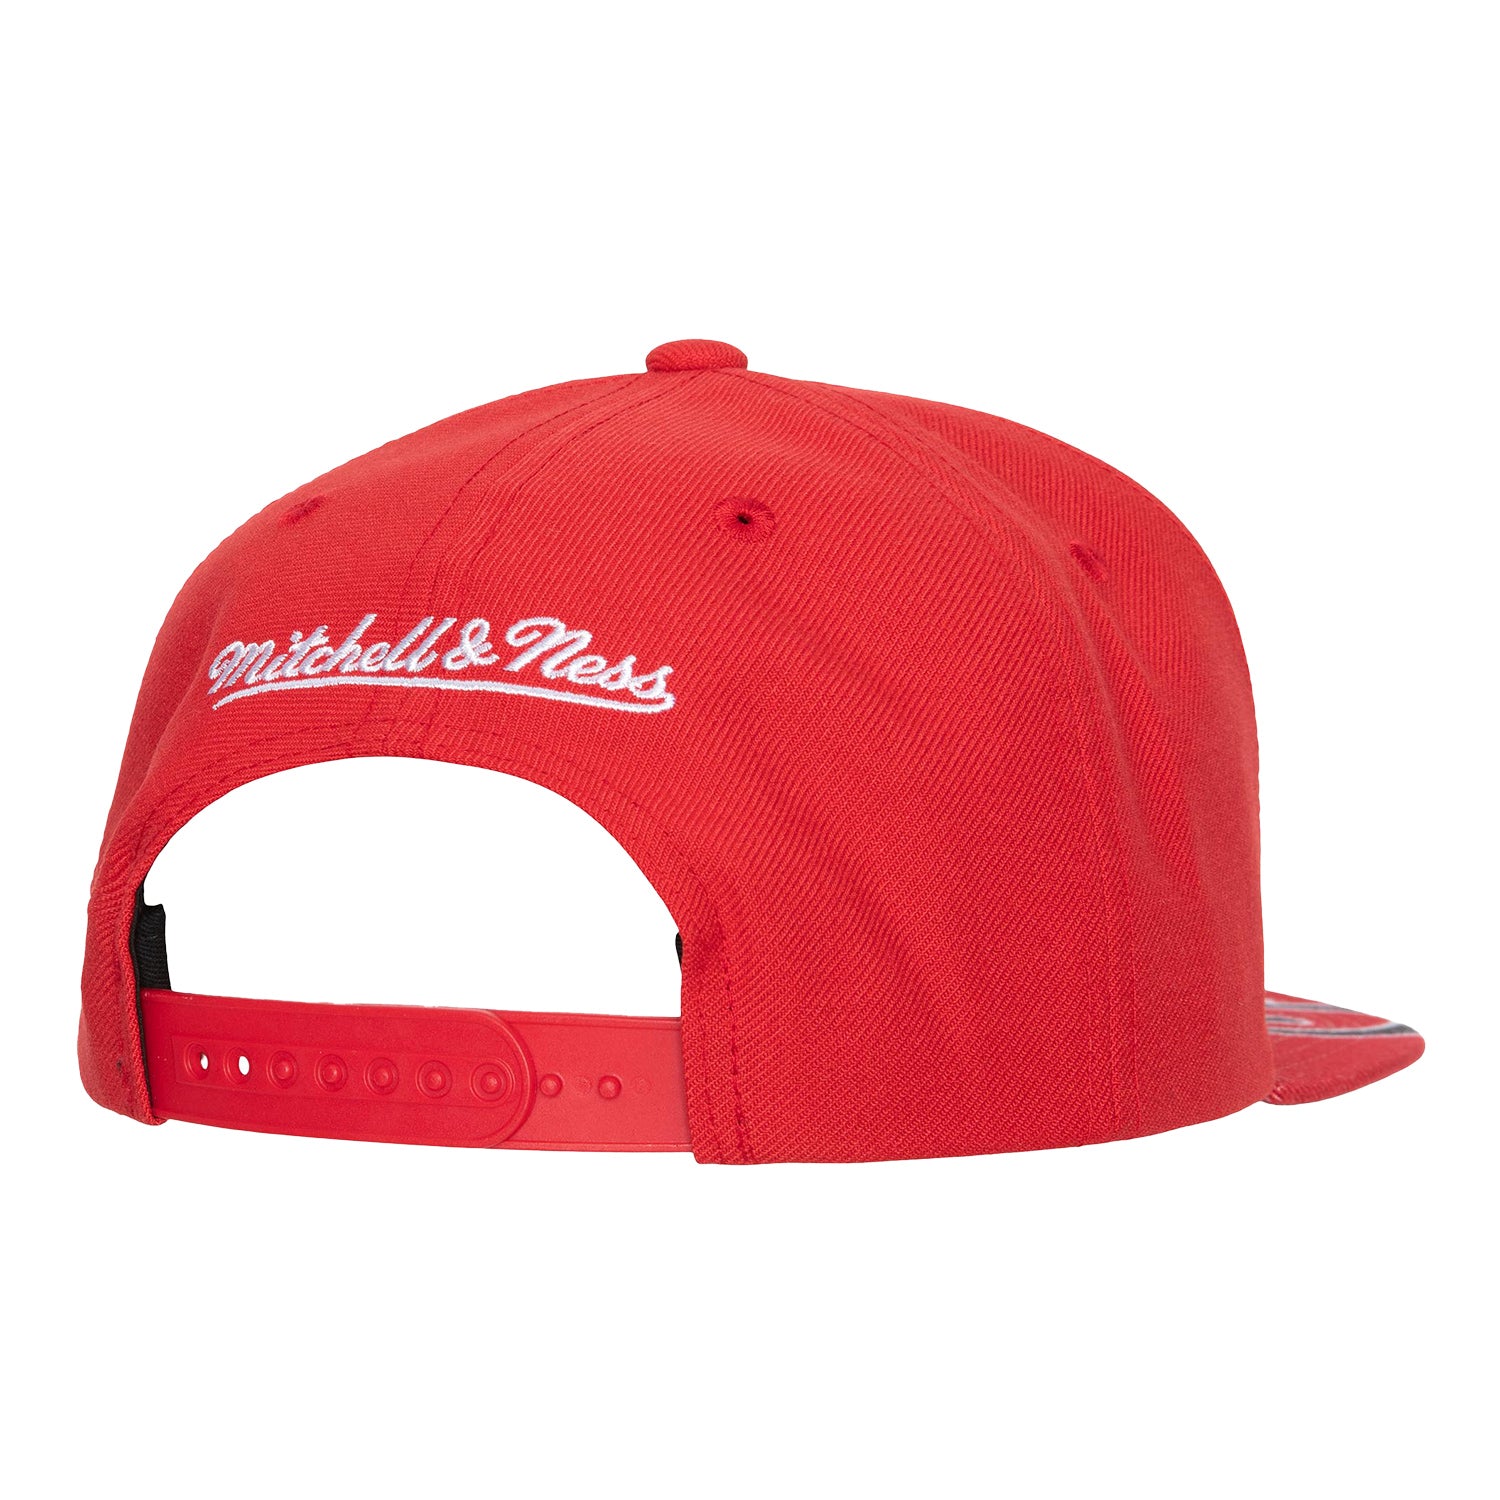 Nike Chicago Bulls NBA Black Strapback Hat